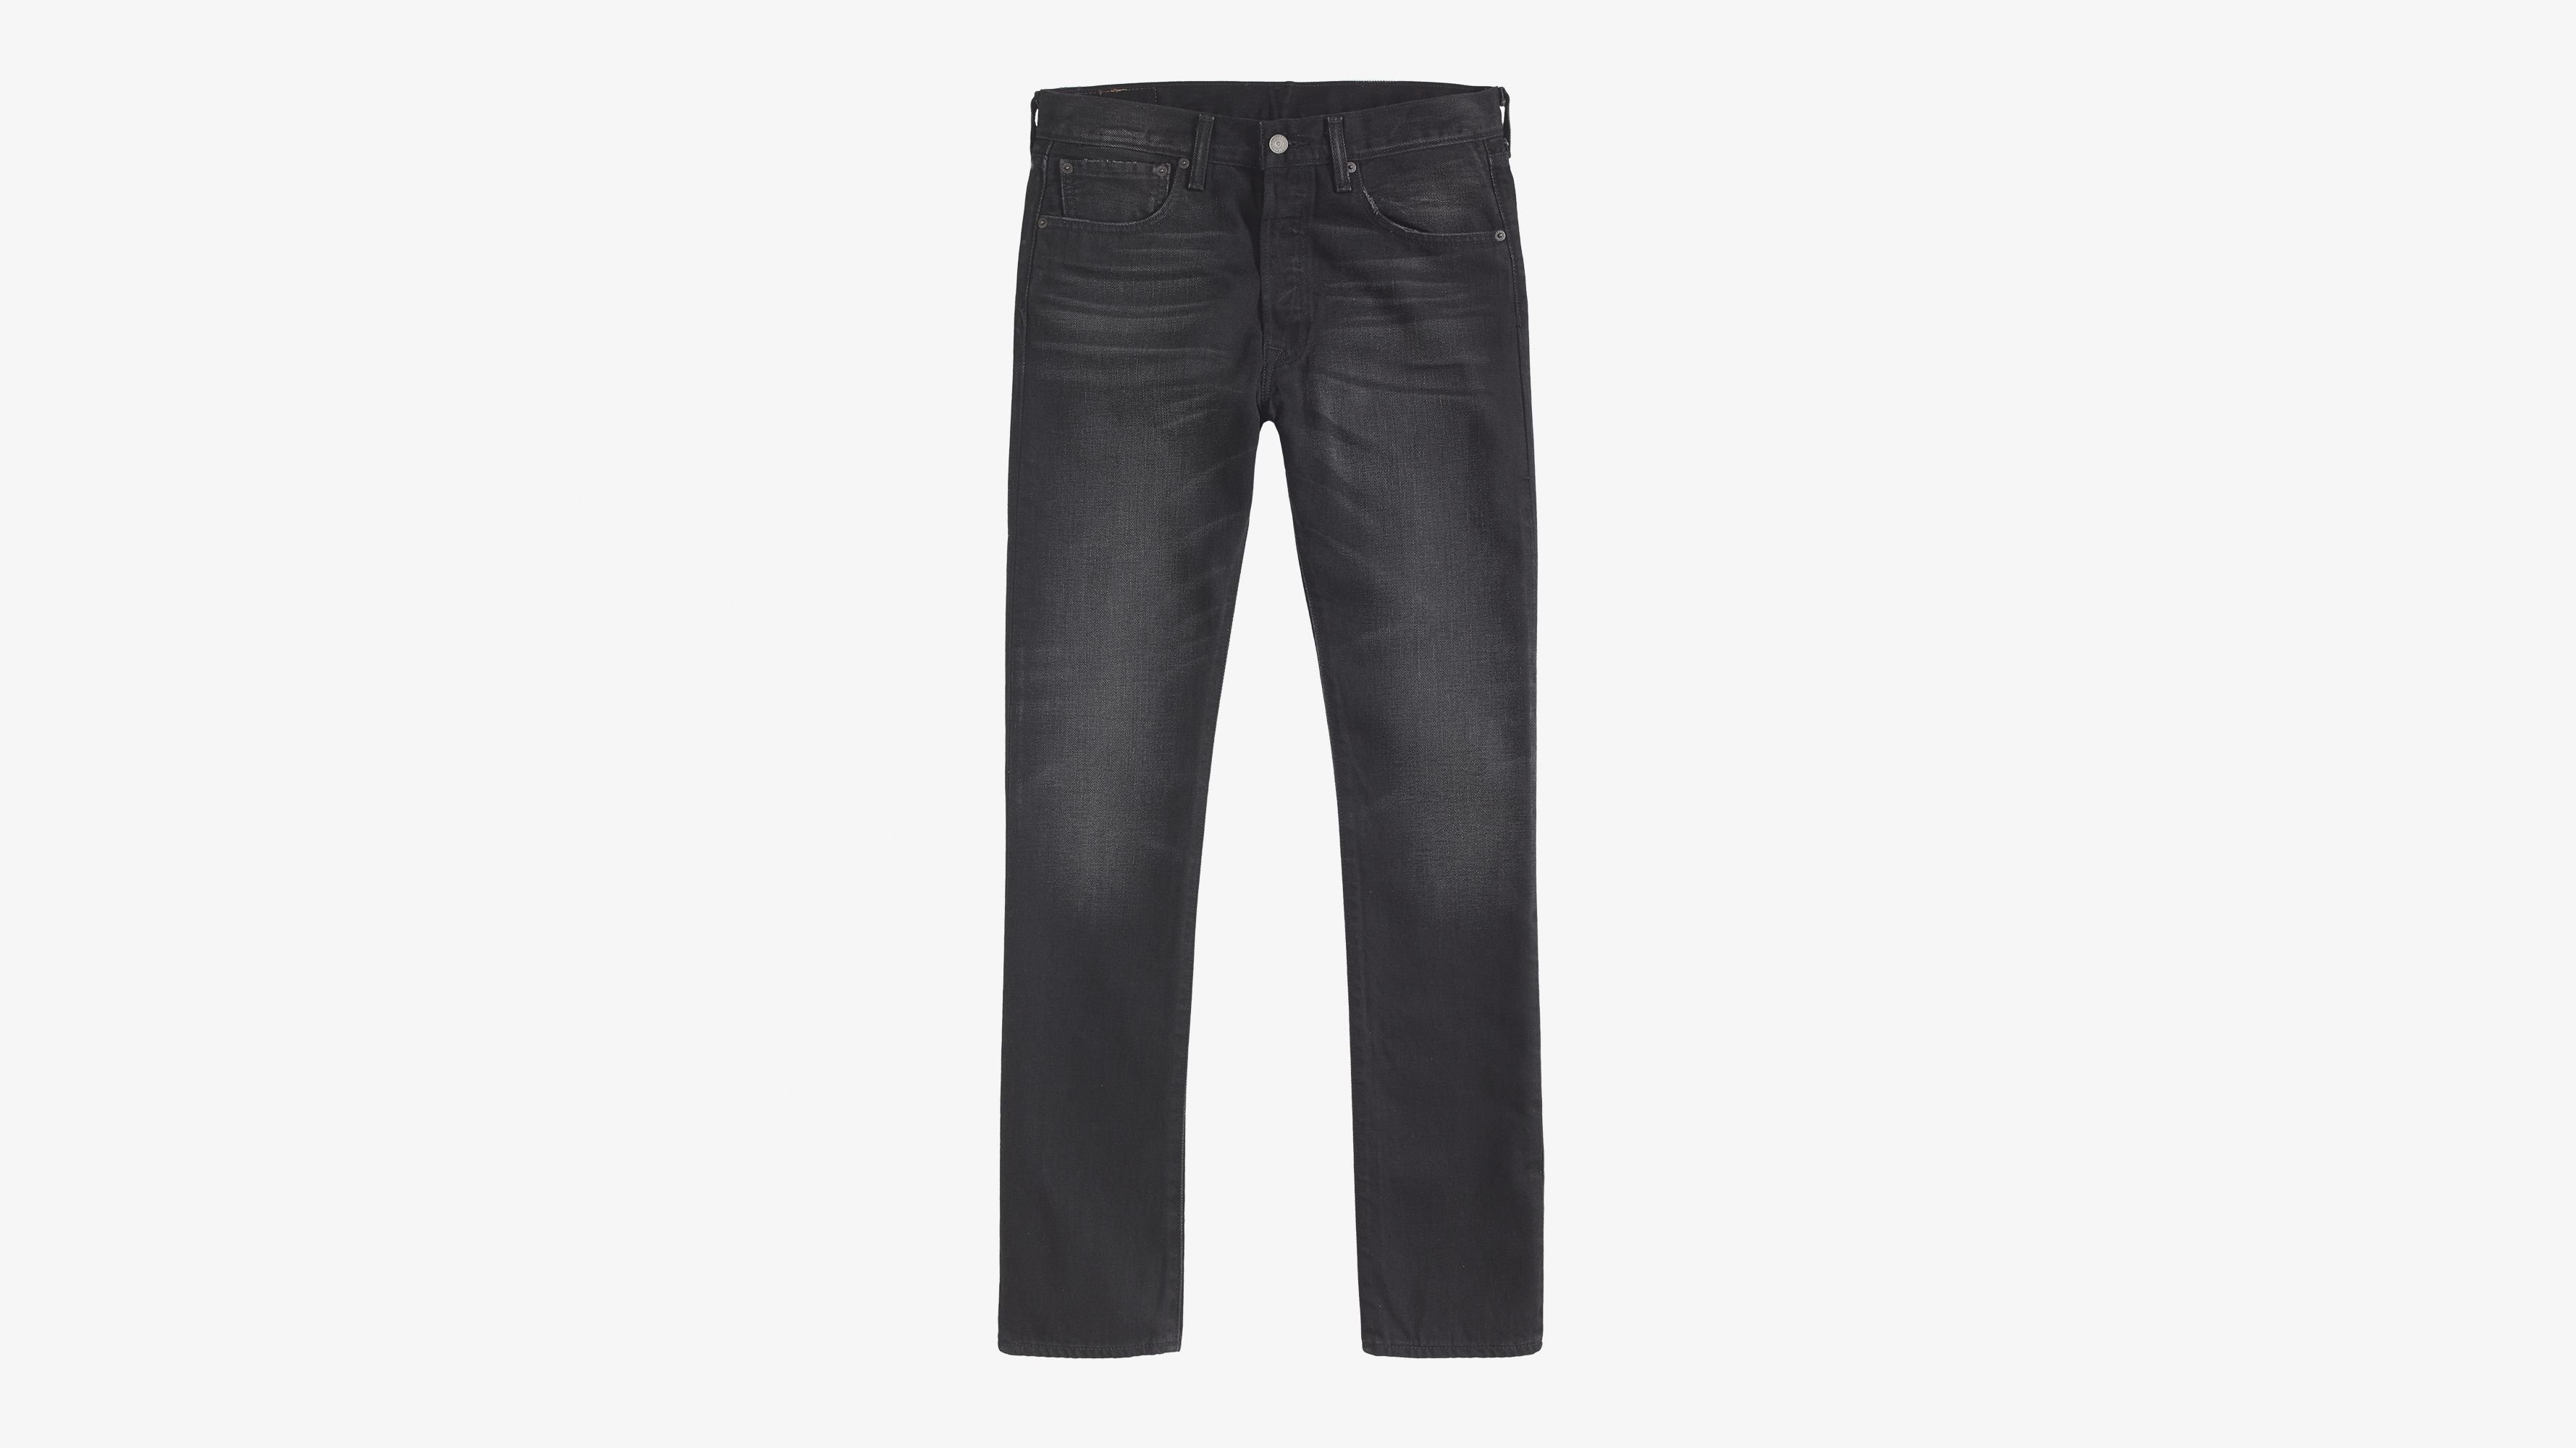 501 grey jeans